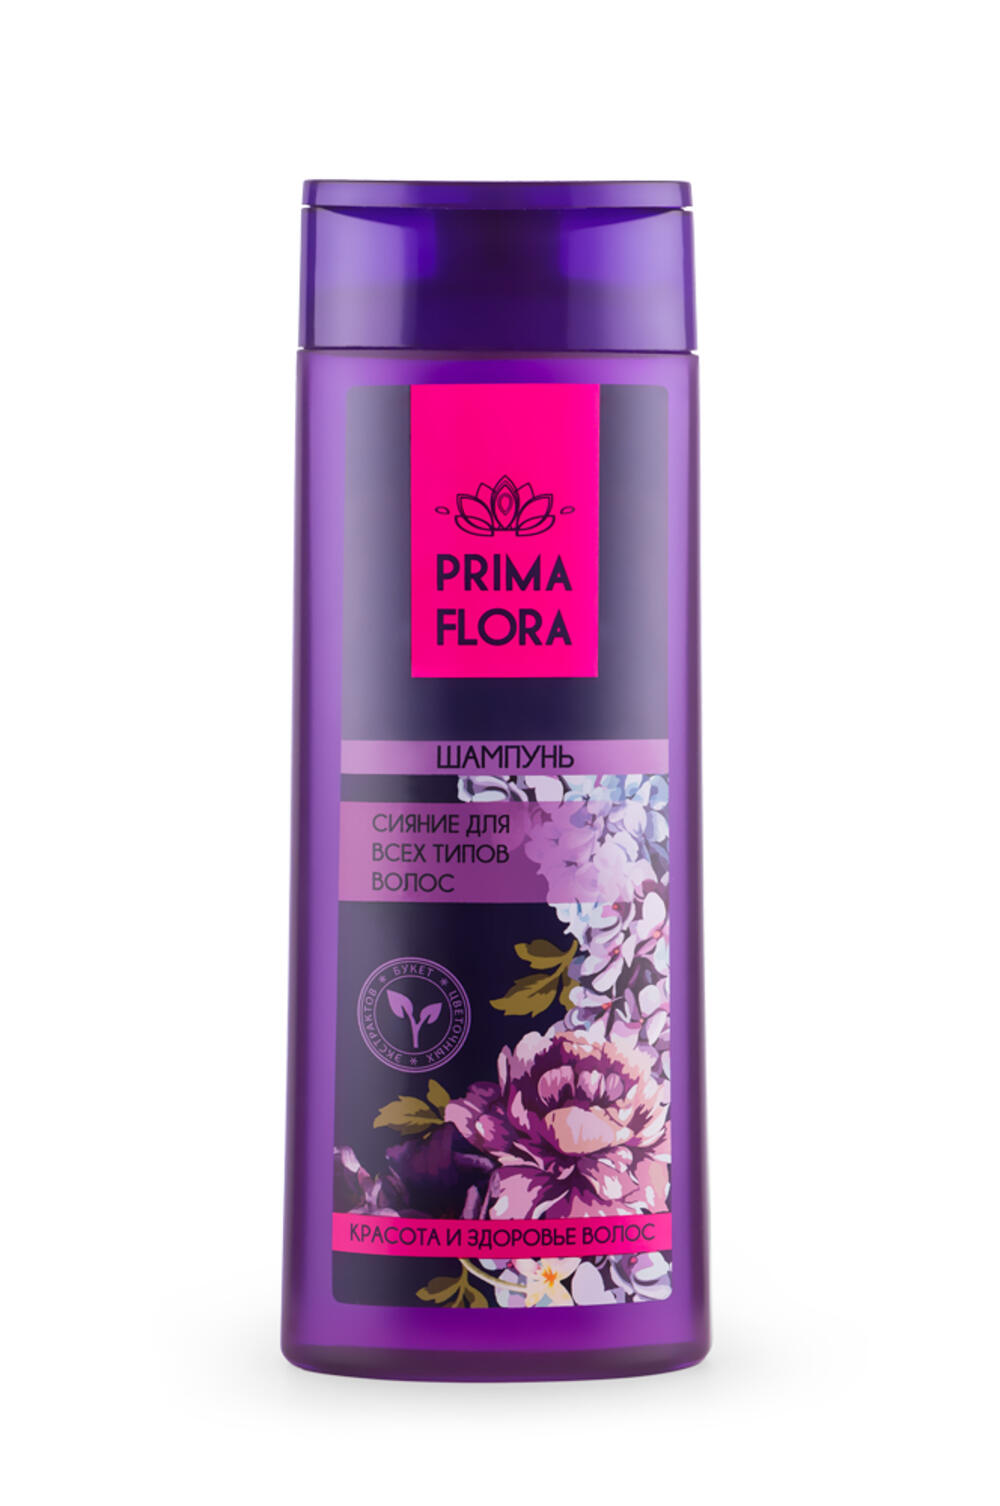 Prima flora šampon